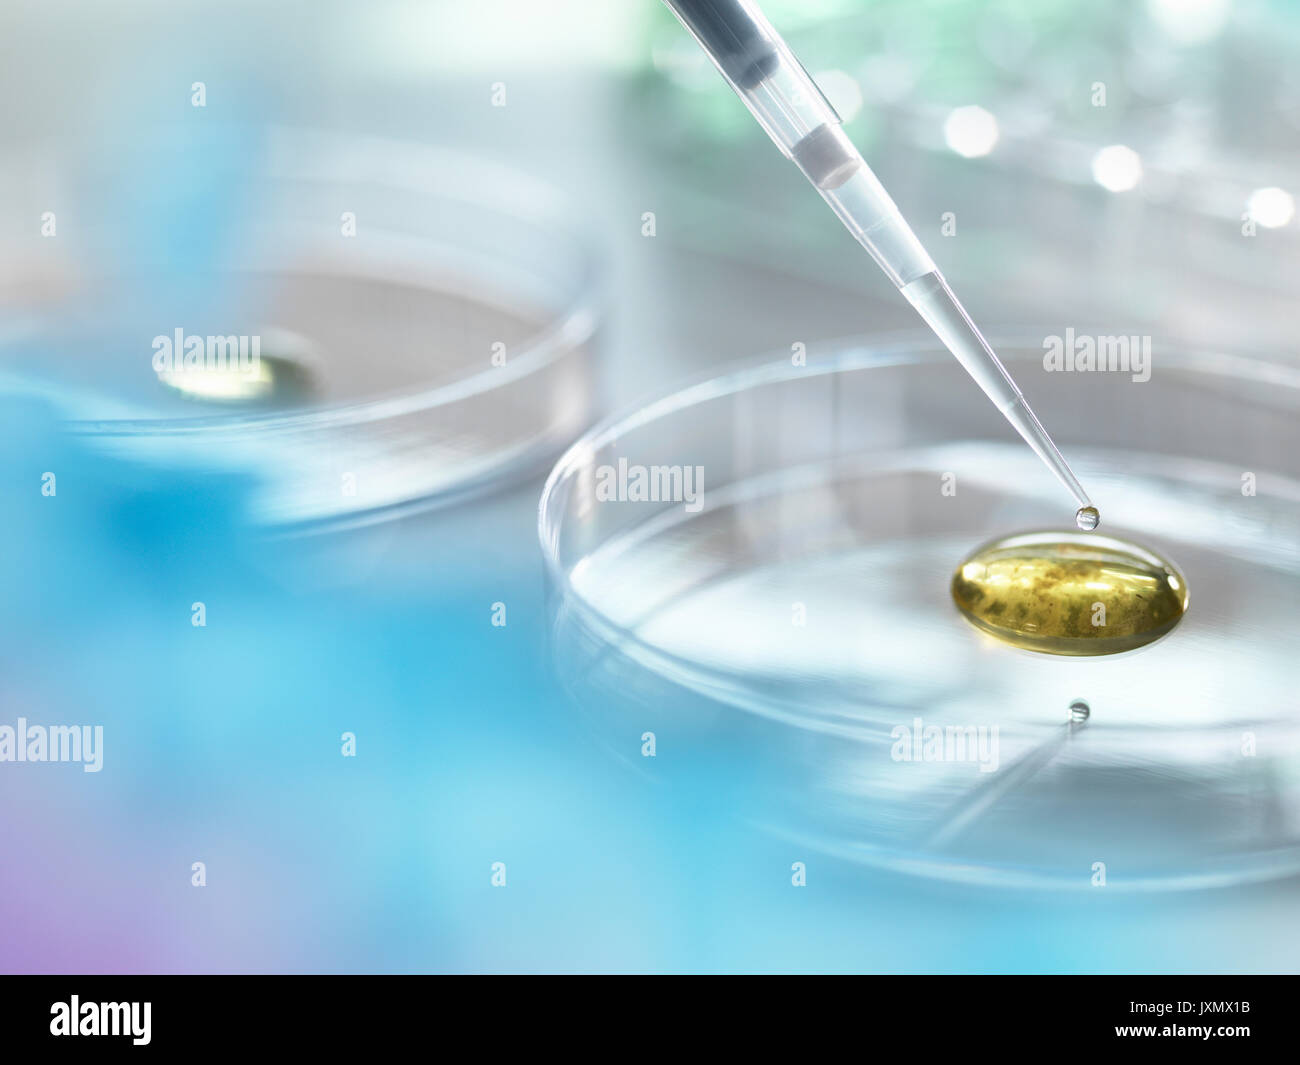 Scientist pipetting a specimen into medium containing bacteria for scientific research in laboratory Stock Photo